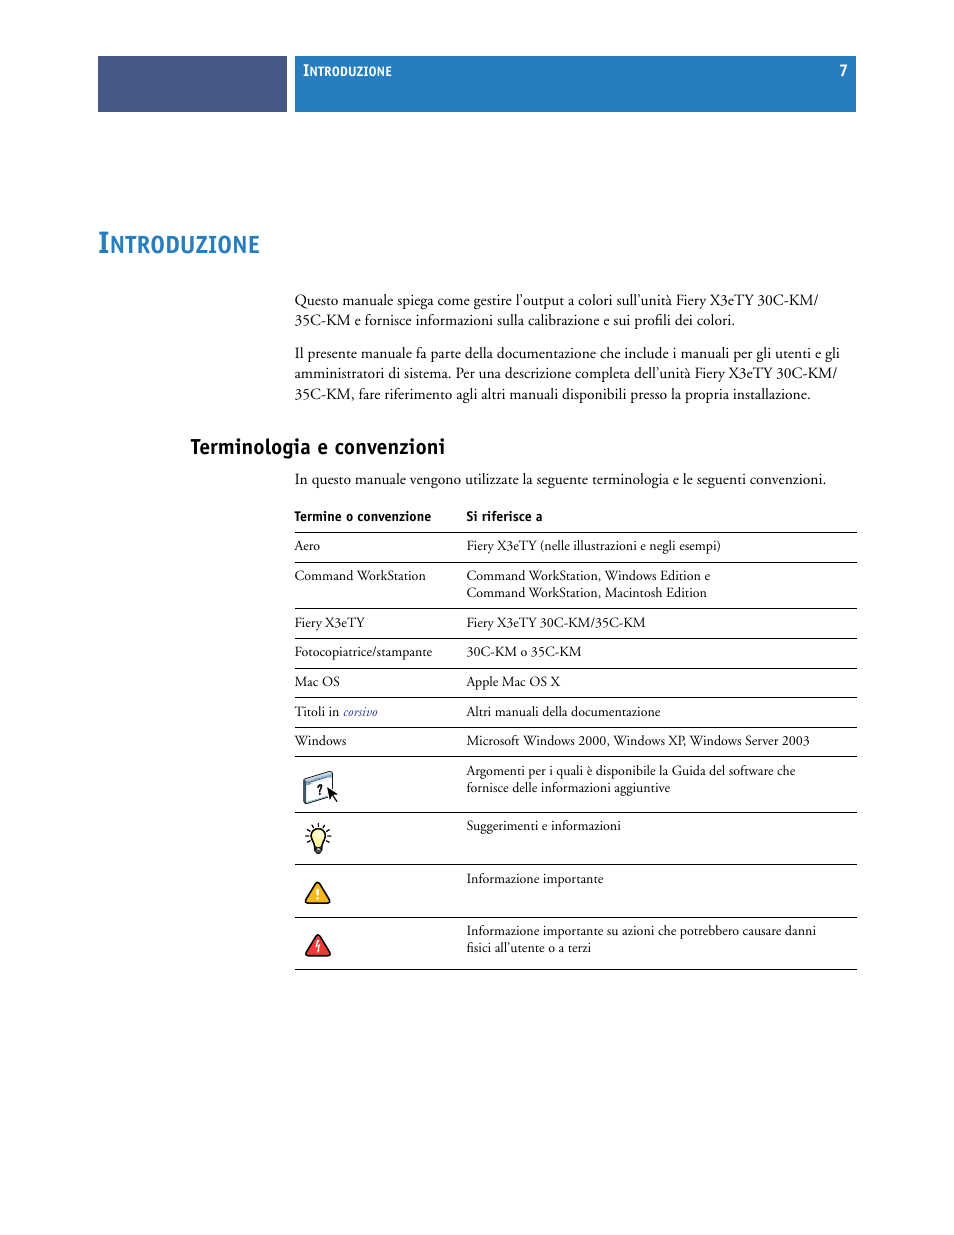 Terminologia e convenzioni, Introduzione, Ntroduzione | Konica Minolta IC-406 Manuale d'uso | Pagina 7 / 108